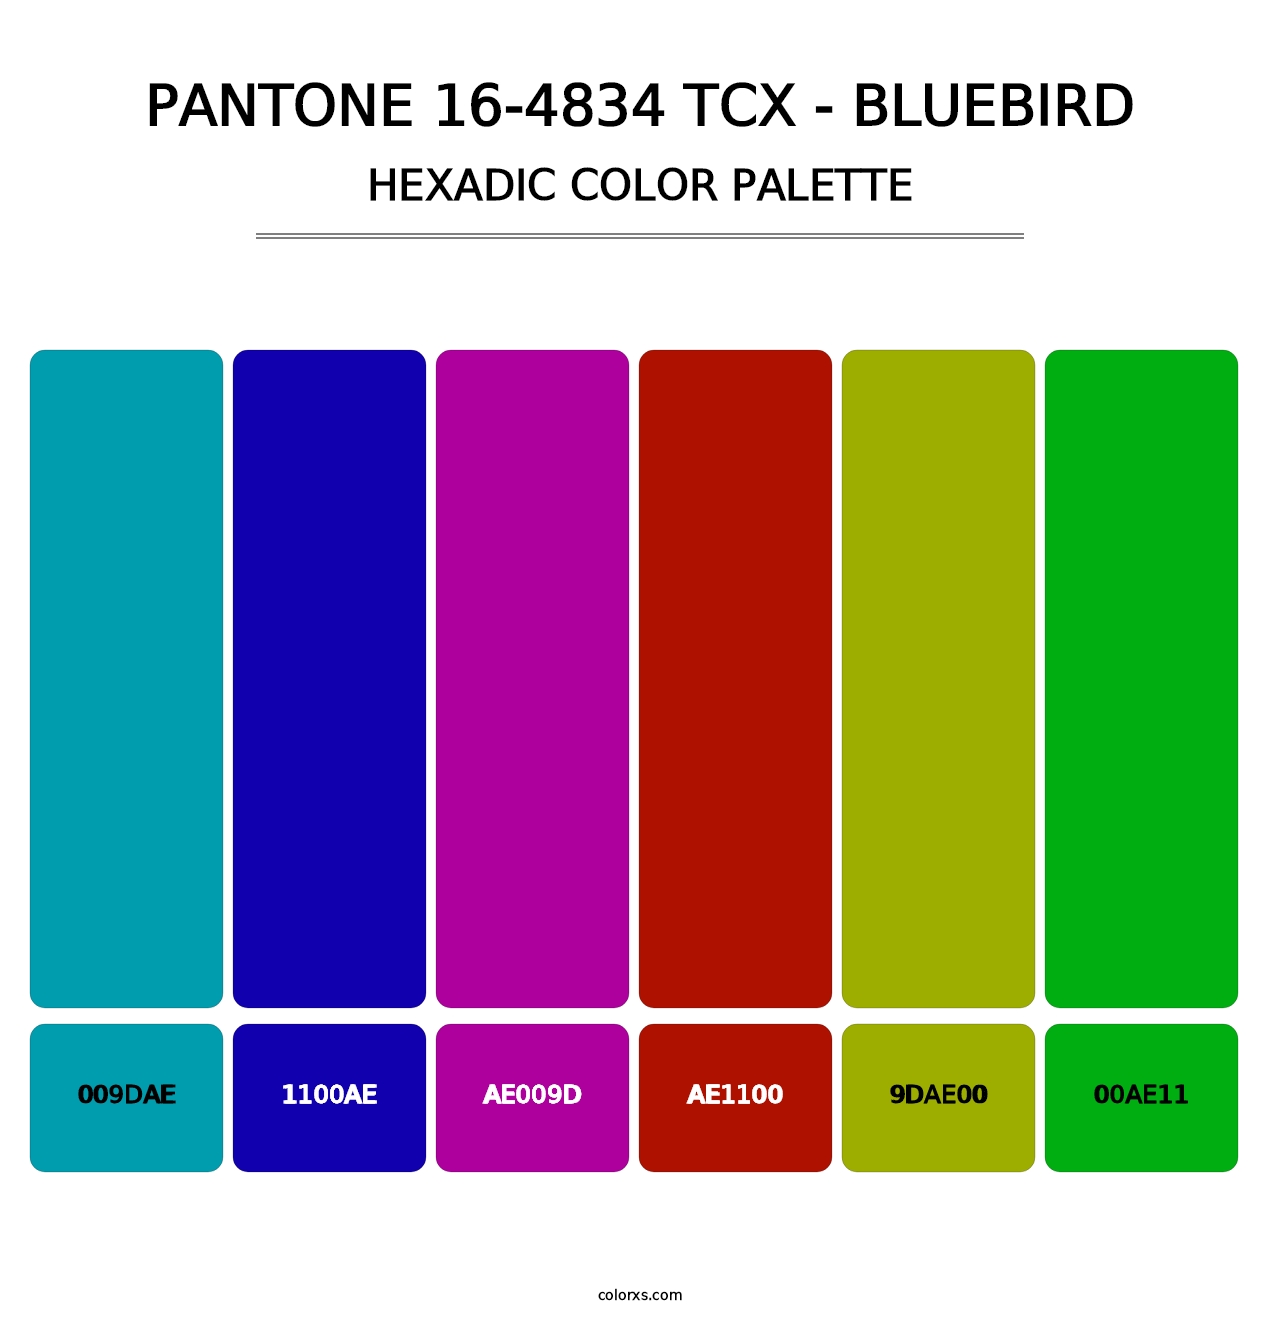 PANTONE 16-4834 TCX - Bluebird - Hexadic Color Palette